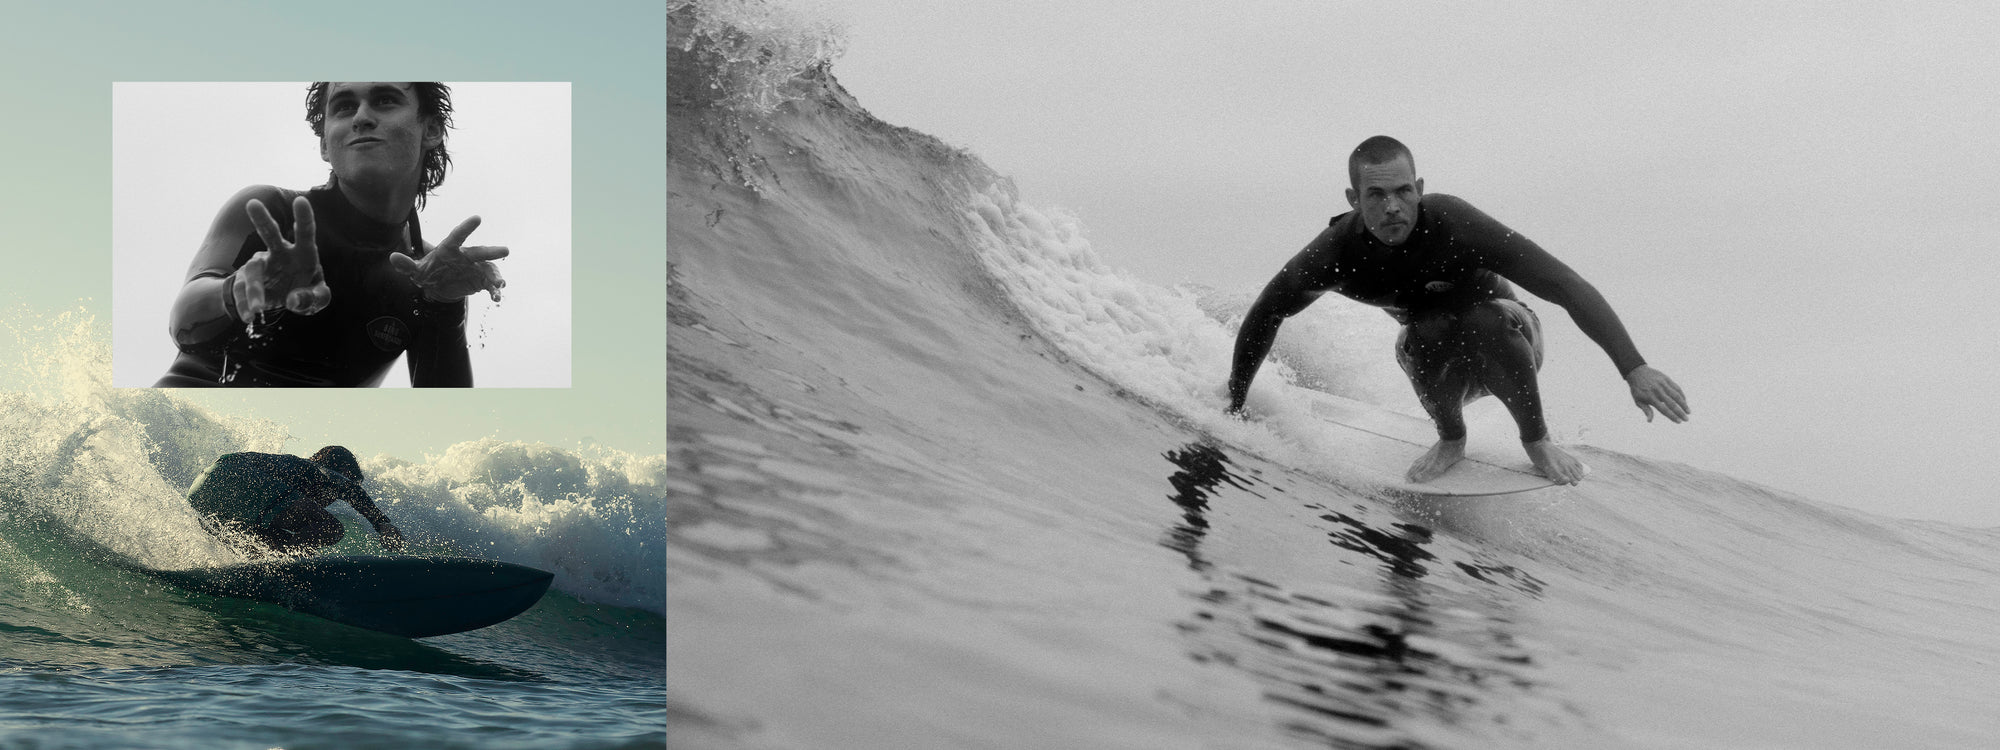 Surf Photographer Spotlight: Ridge BenBen